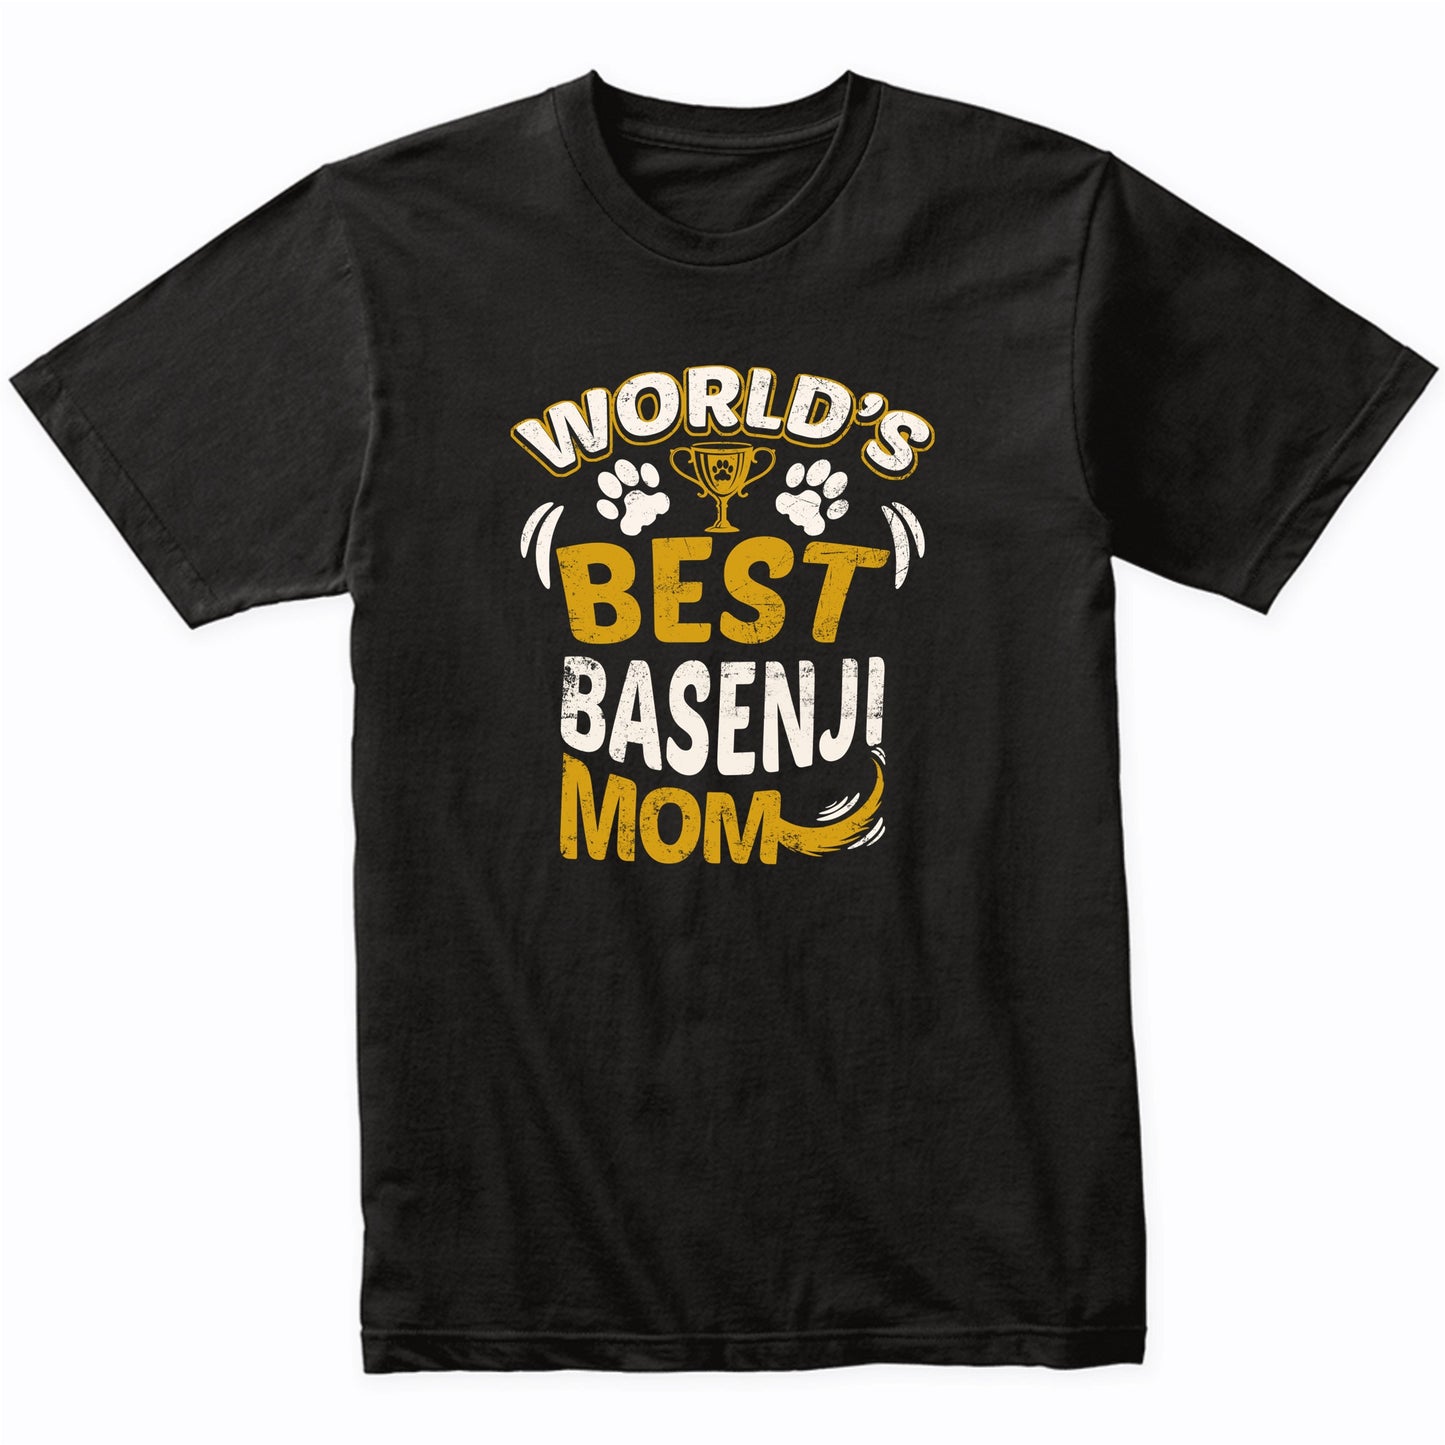 World's Best Basenji Mom Graphic T-Shirt